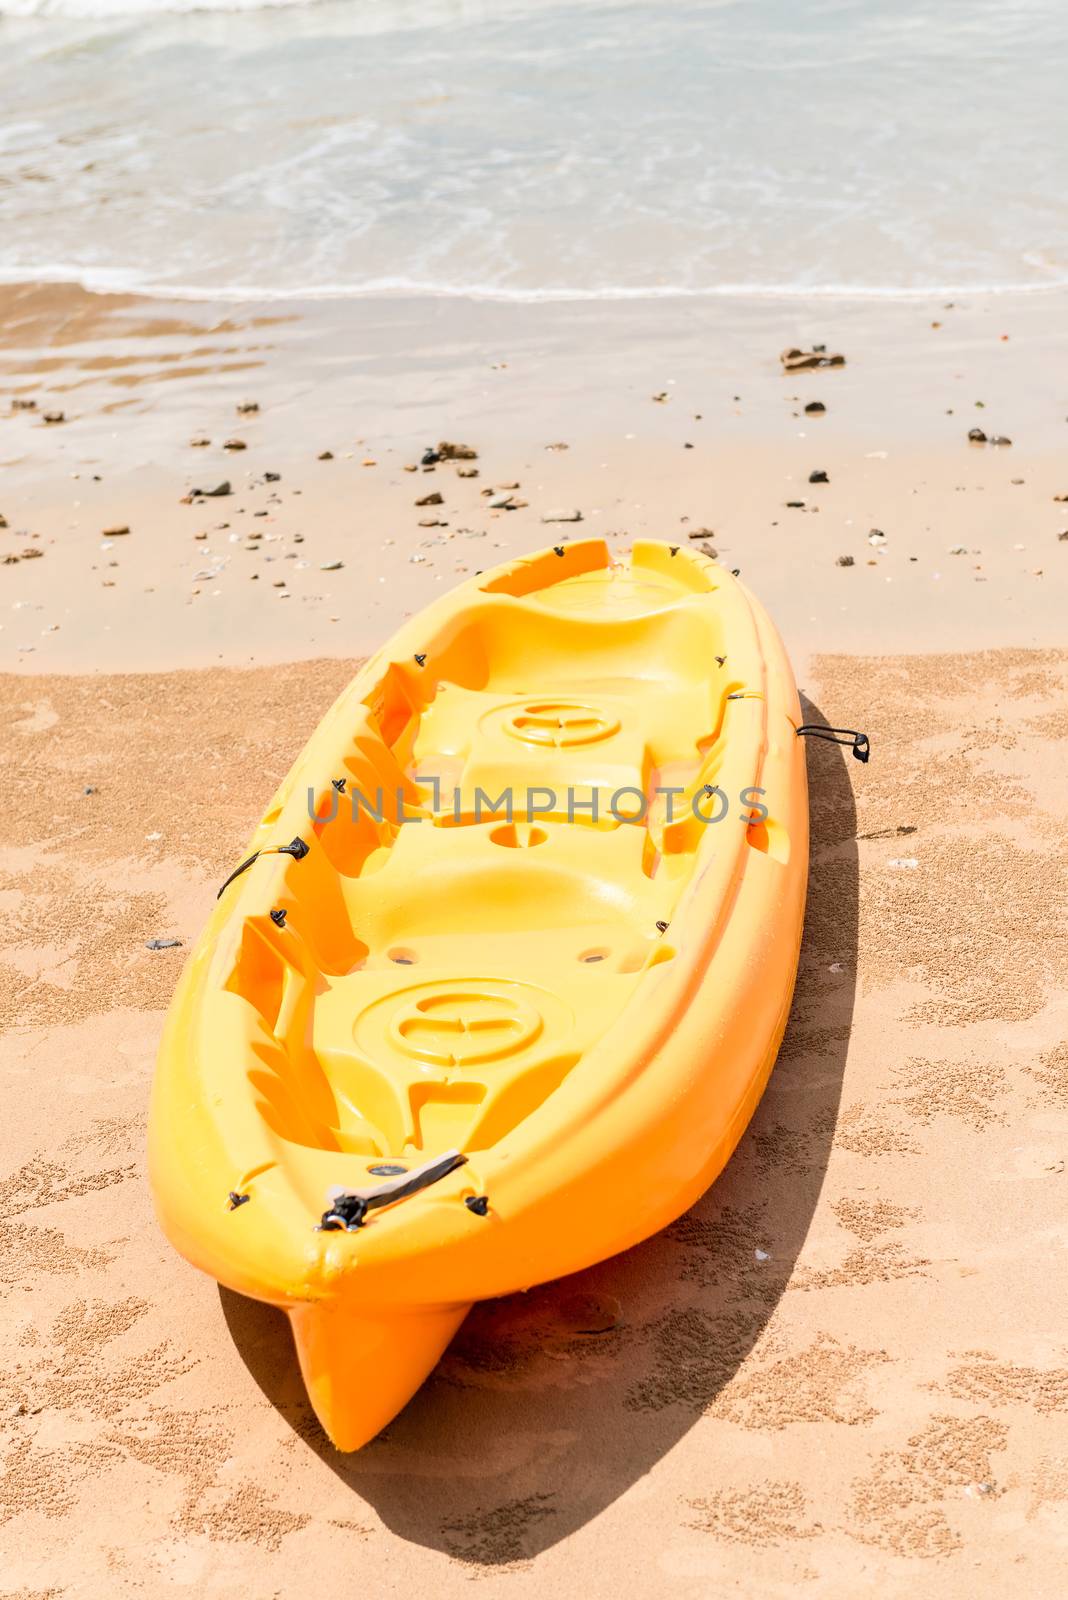 yellow plastic kayak lies on a sandy beach near the sea